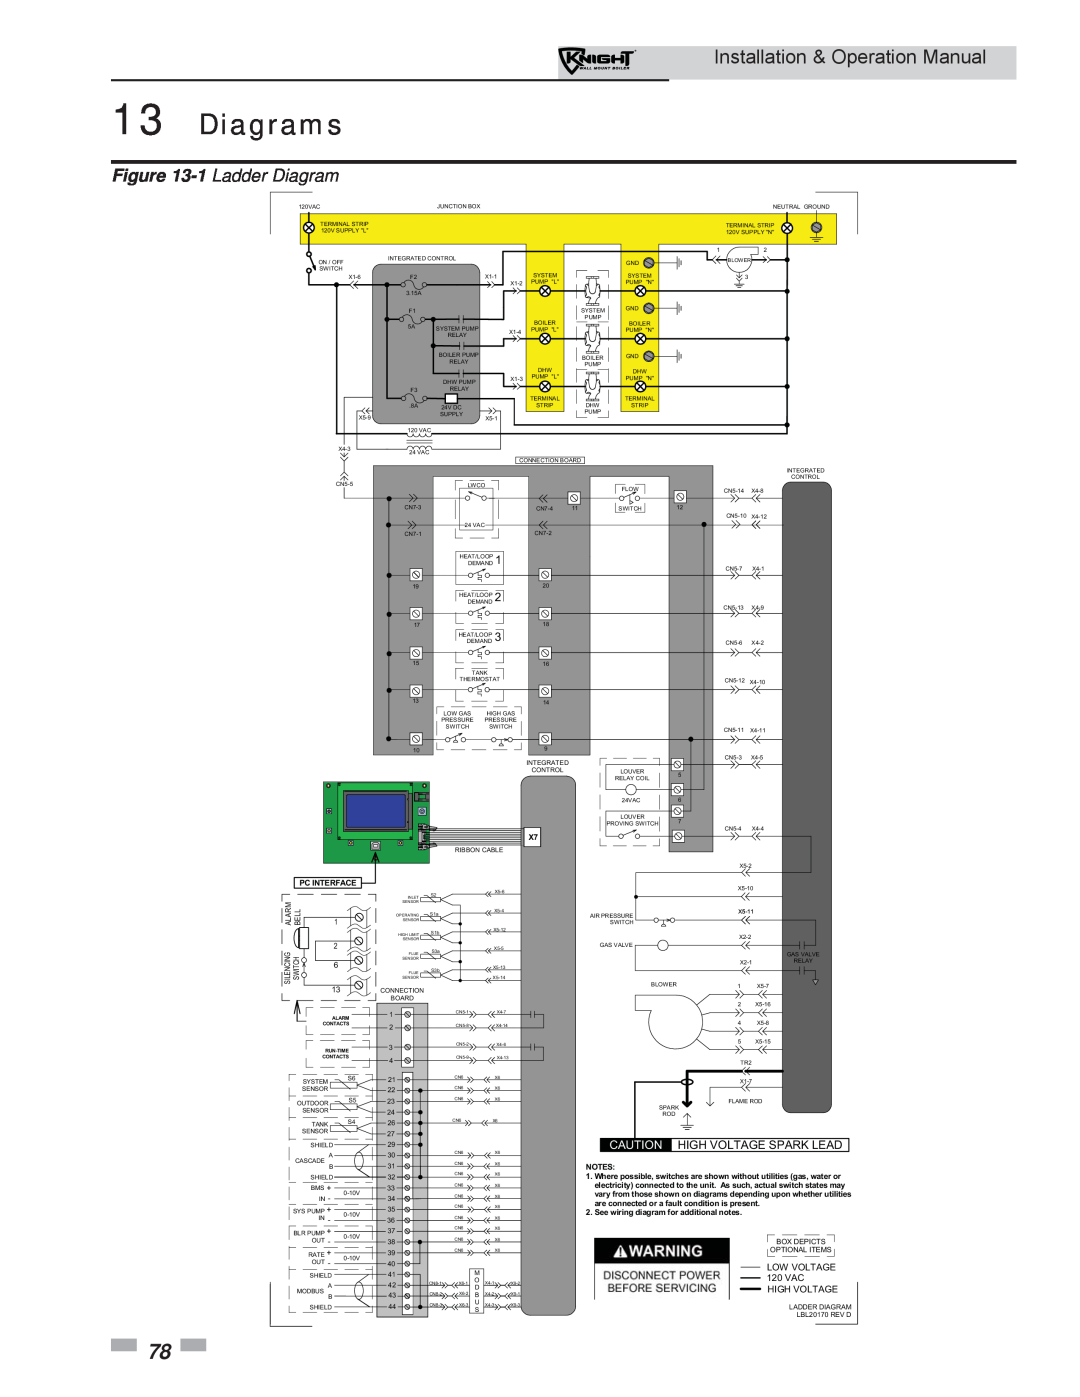 Lochinvar WH 55-399 Diagrams, 1 Ladder Diagram, Installation & Operation Manual, Caution High Voltage Spark Lead, 120 VAC 